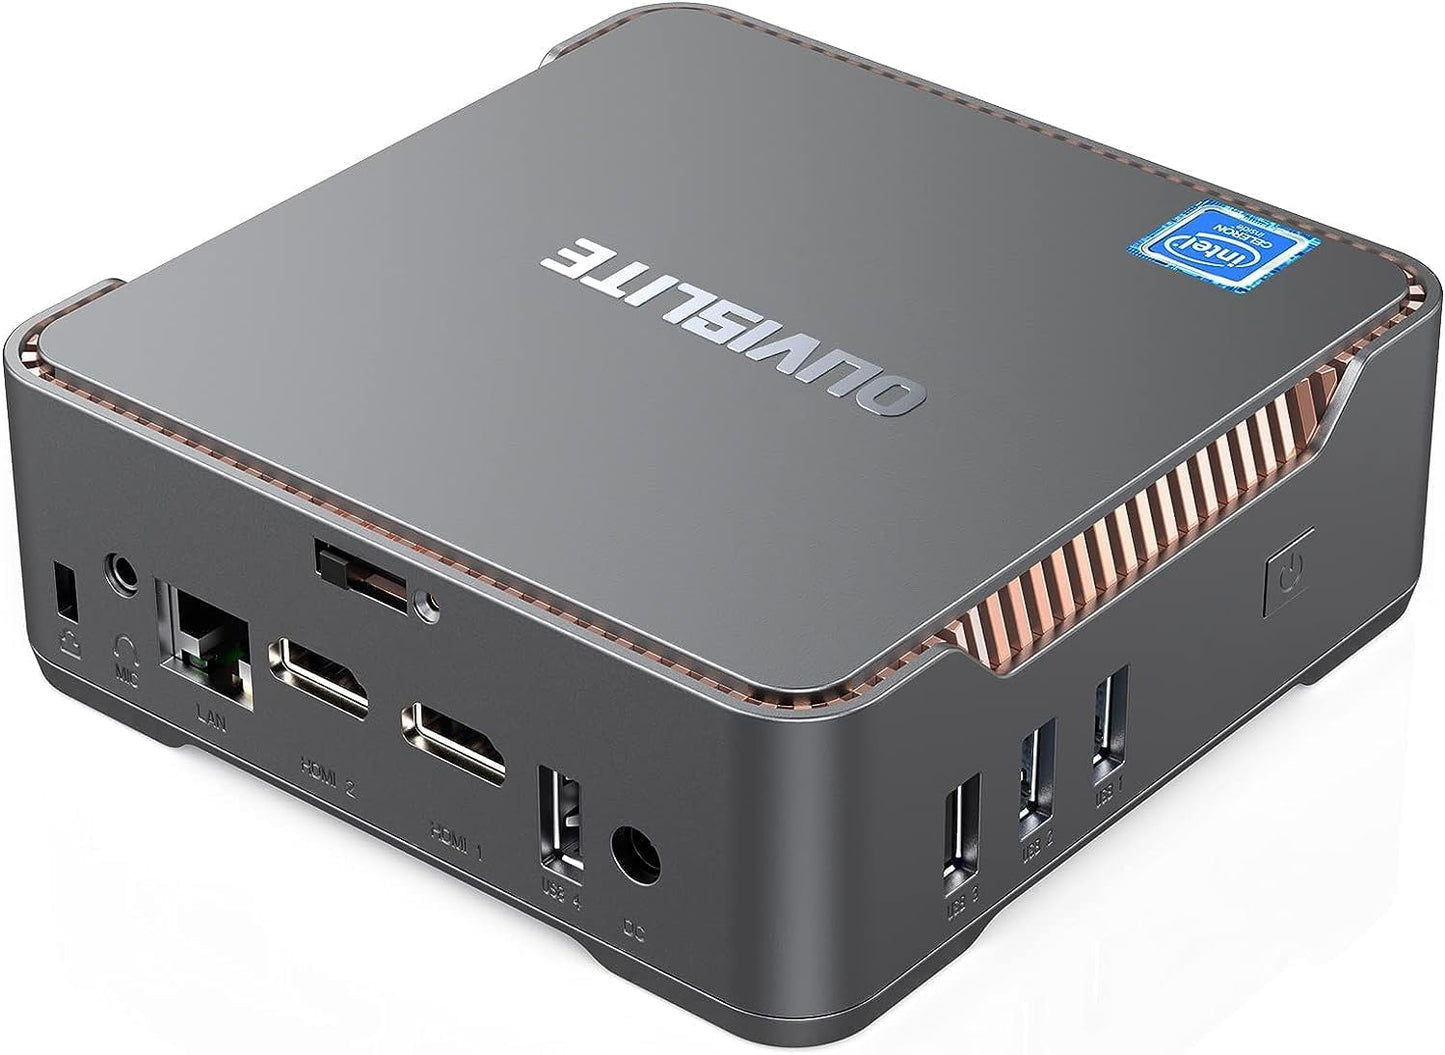 Mini PC Ιntel Celeron N3350 Processor(Up to 2.4GHz), 4GB DDR3 64GB eMMC Mini Computer Windows 10 Pro Desktop Computers Support 2TB Expansion, 4K HDMI Triple Display, Dual WiFi, BT4.2, Gigabit Ethernet